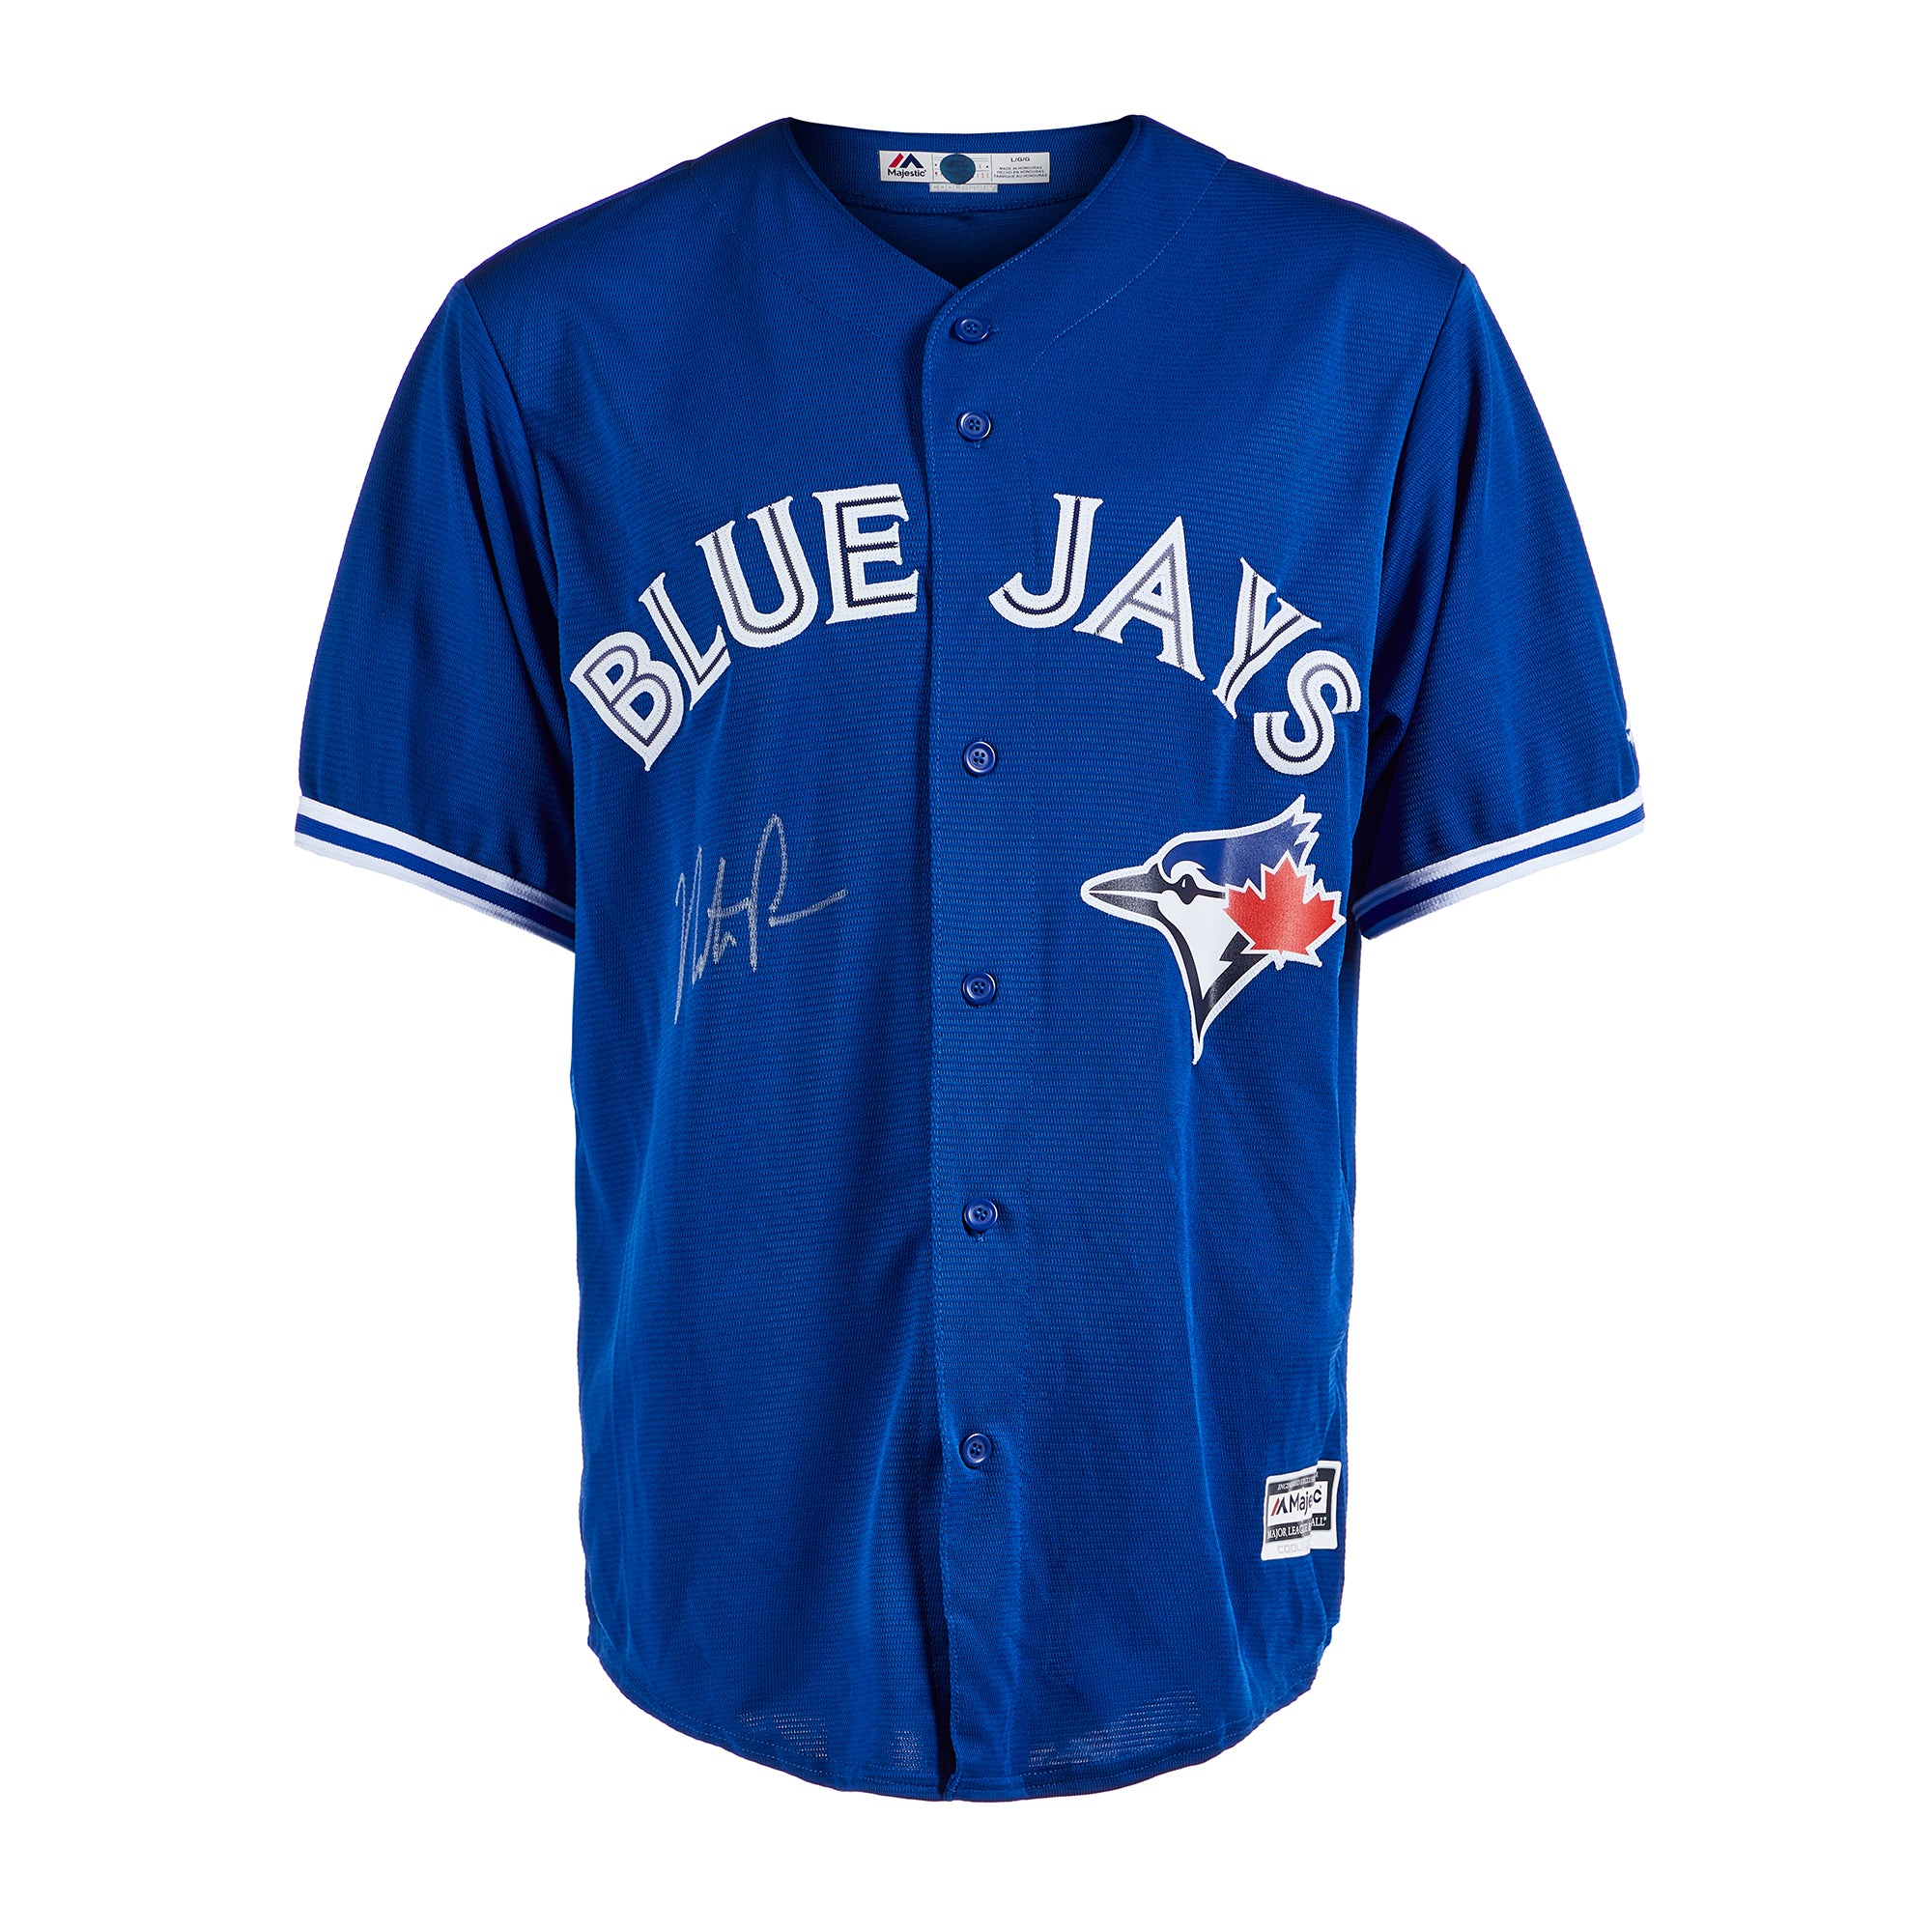 Nate Pearson Toronto Blue Jays Autographed Baseball Jersey